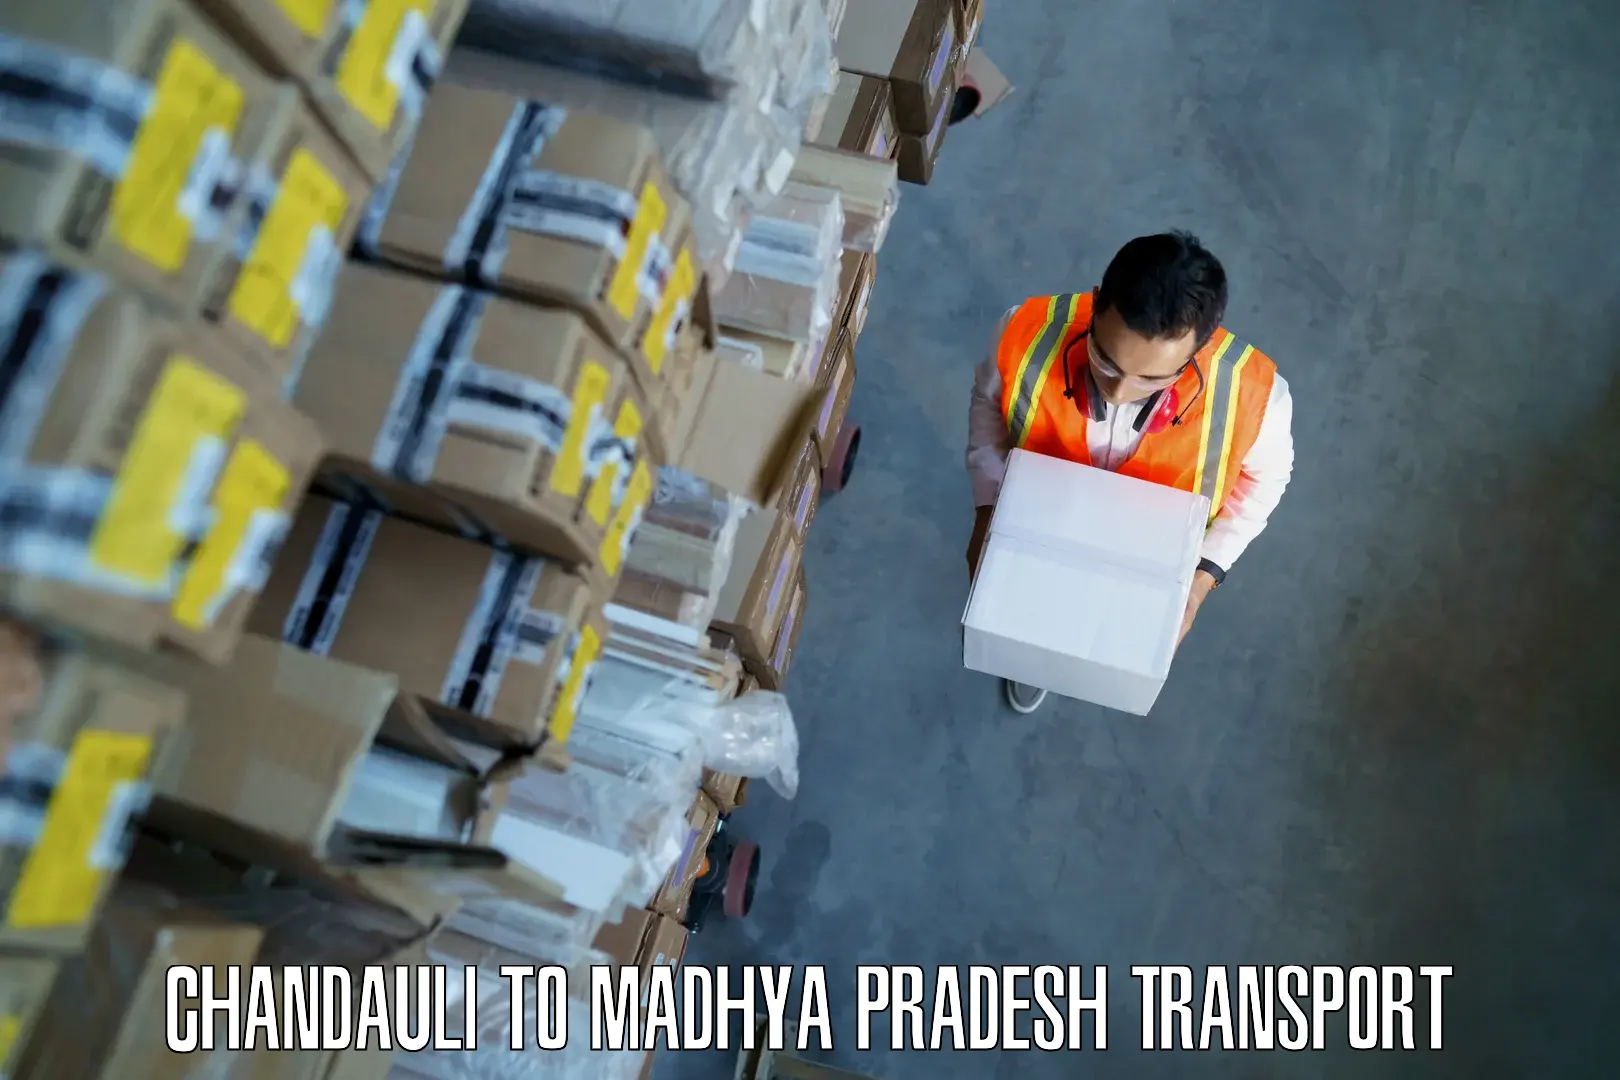 Pick up transport service Chandauli to Morar